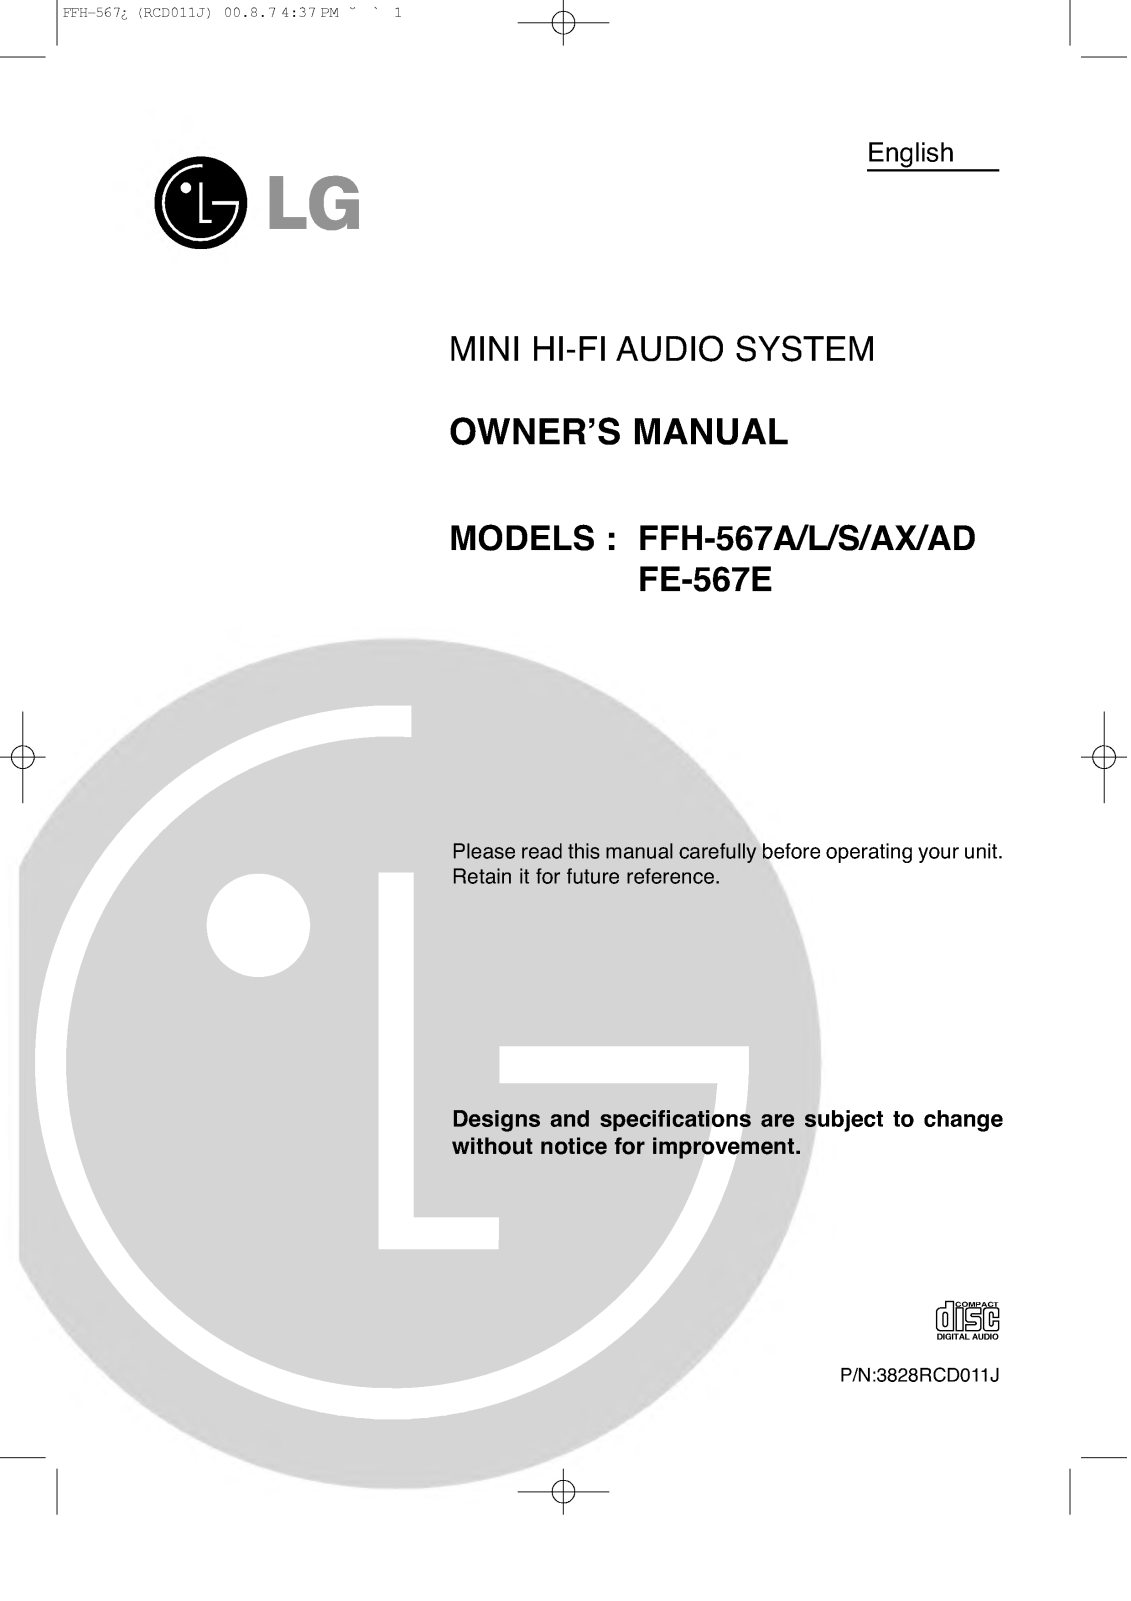 LG FFH-567A User Manual